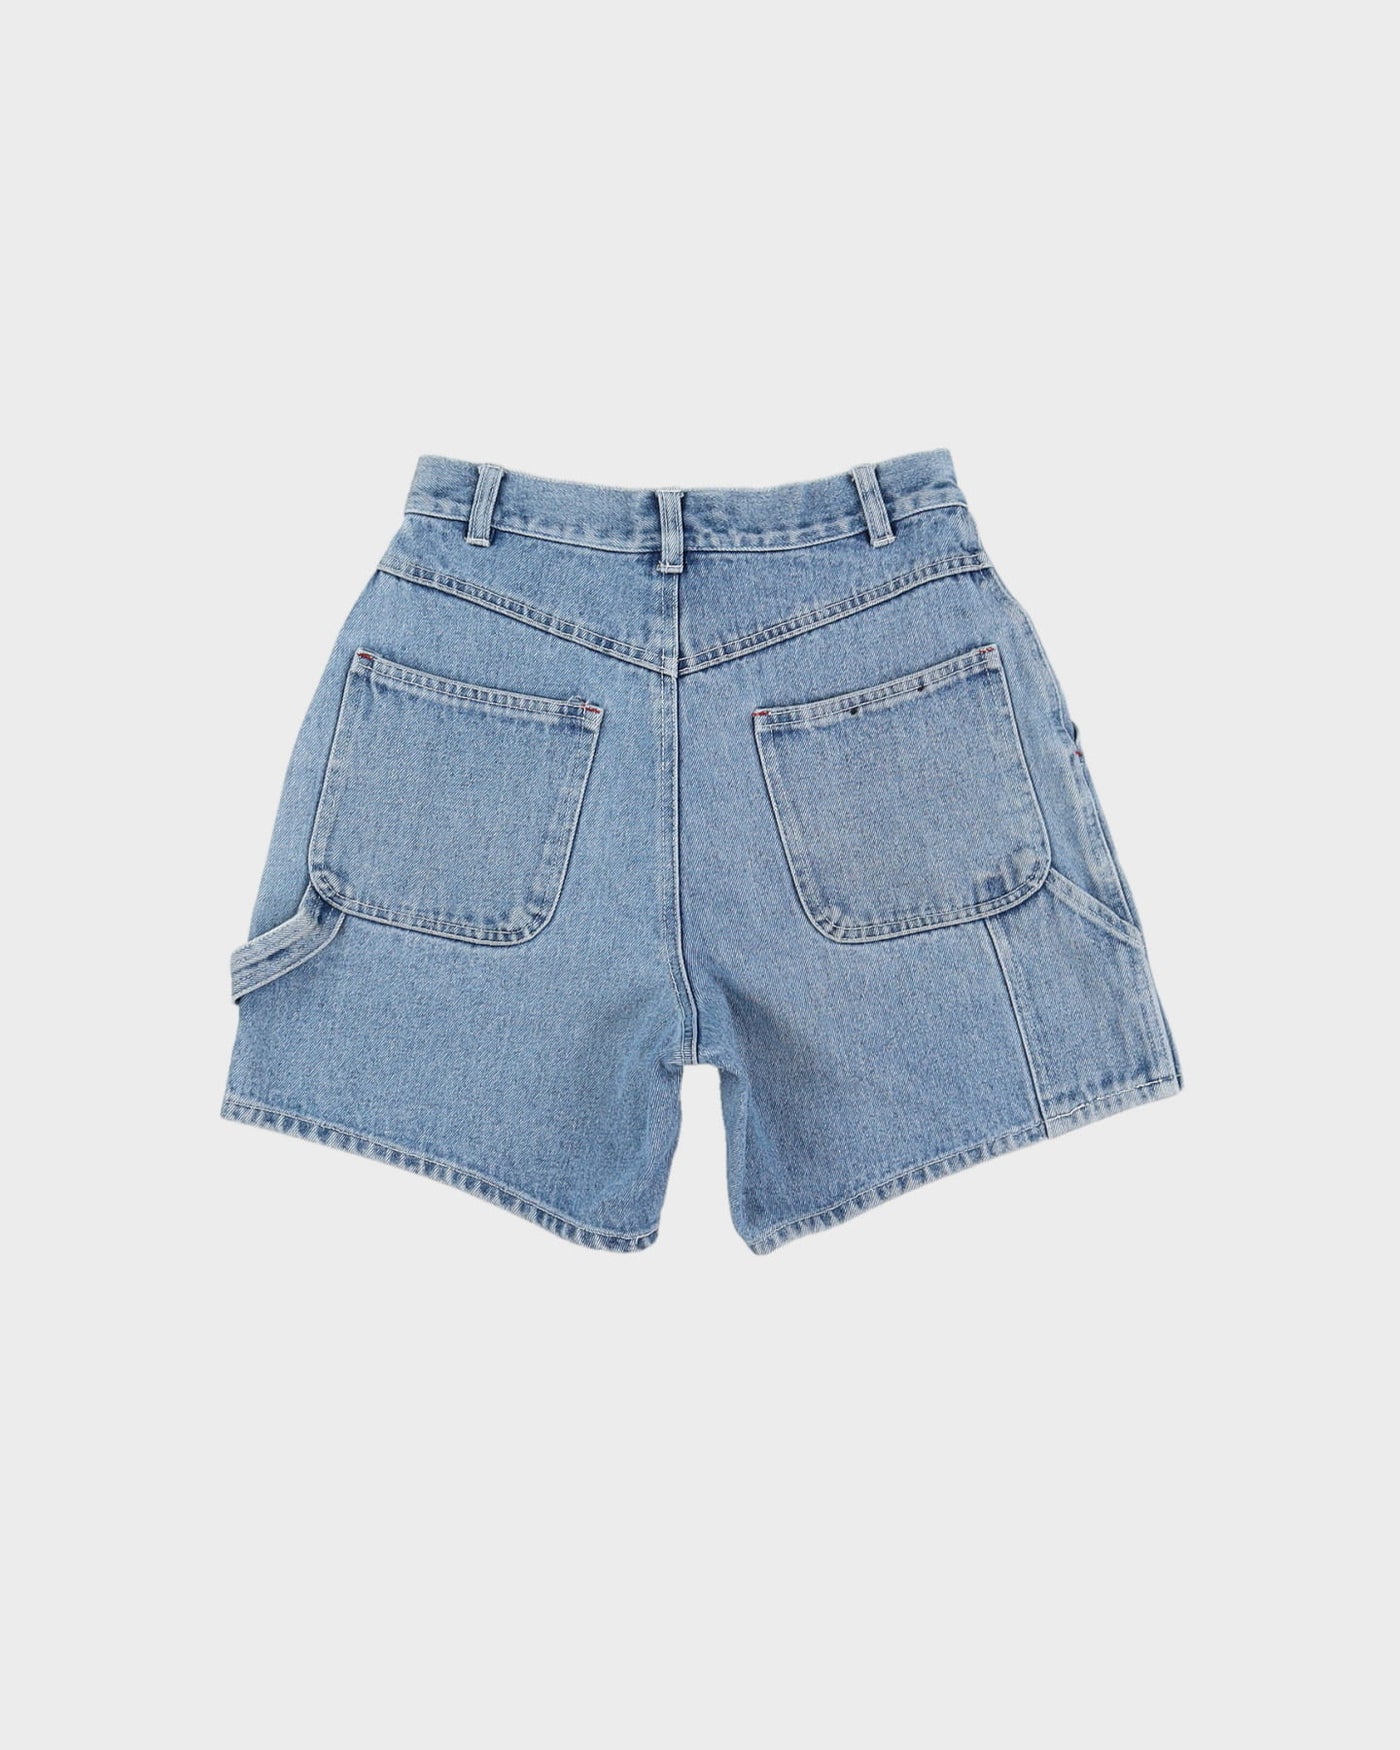 Vintage 90s Nevada Jeanswear Blue Denim Shorts - W26